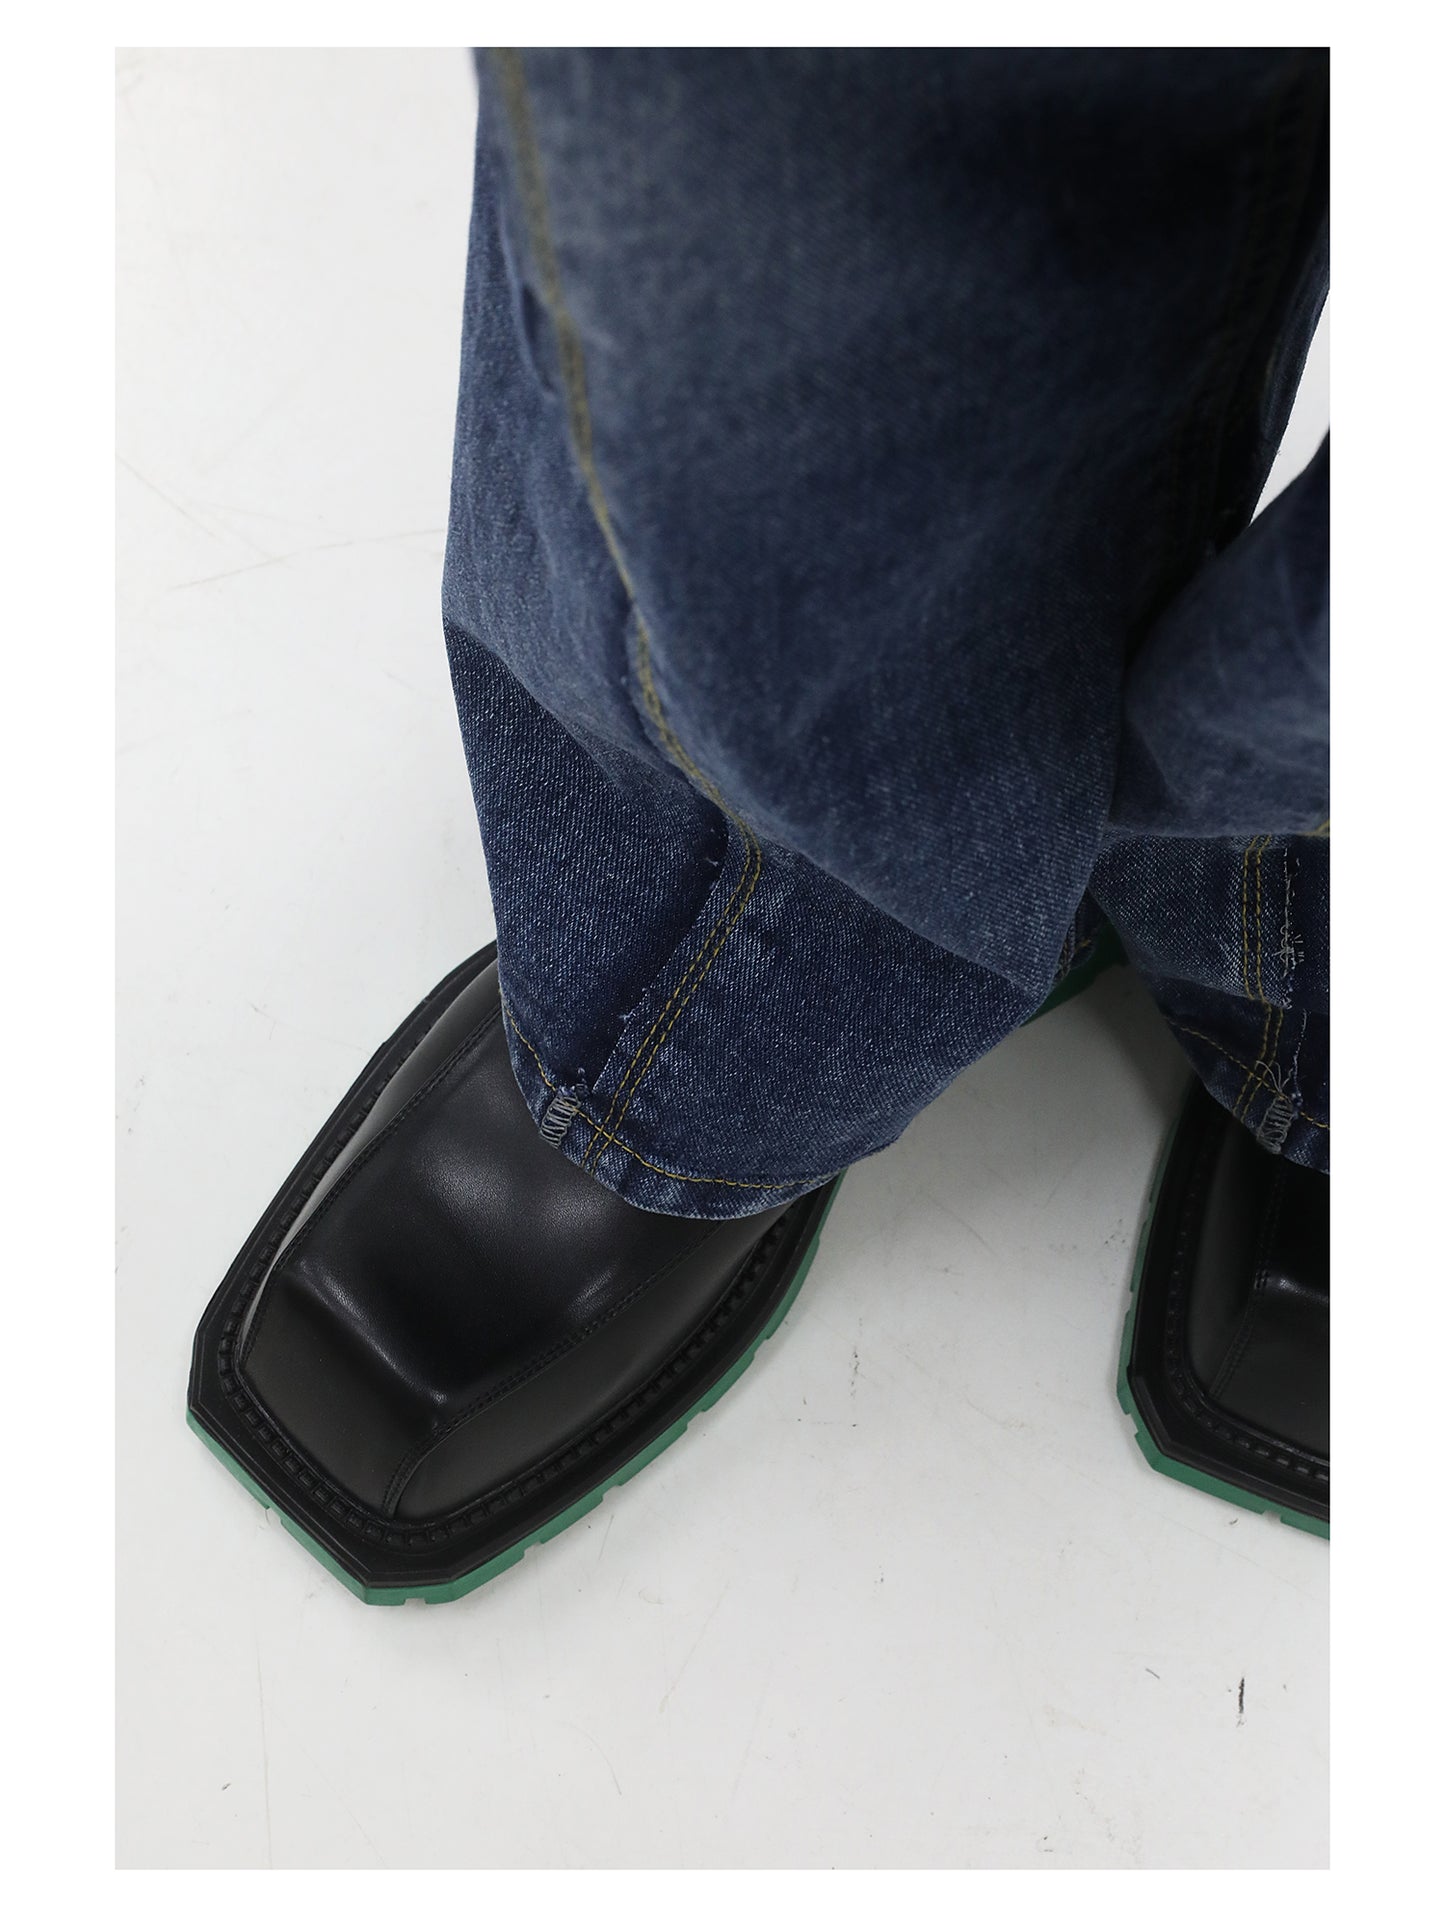 【HOT!】Black Square Toe Leather Shoes